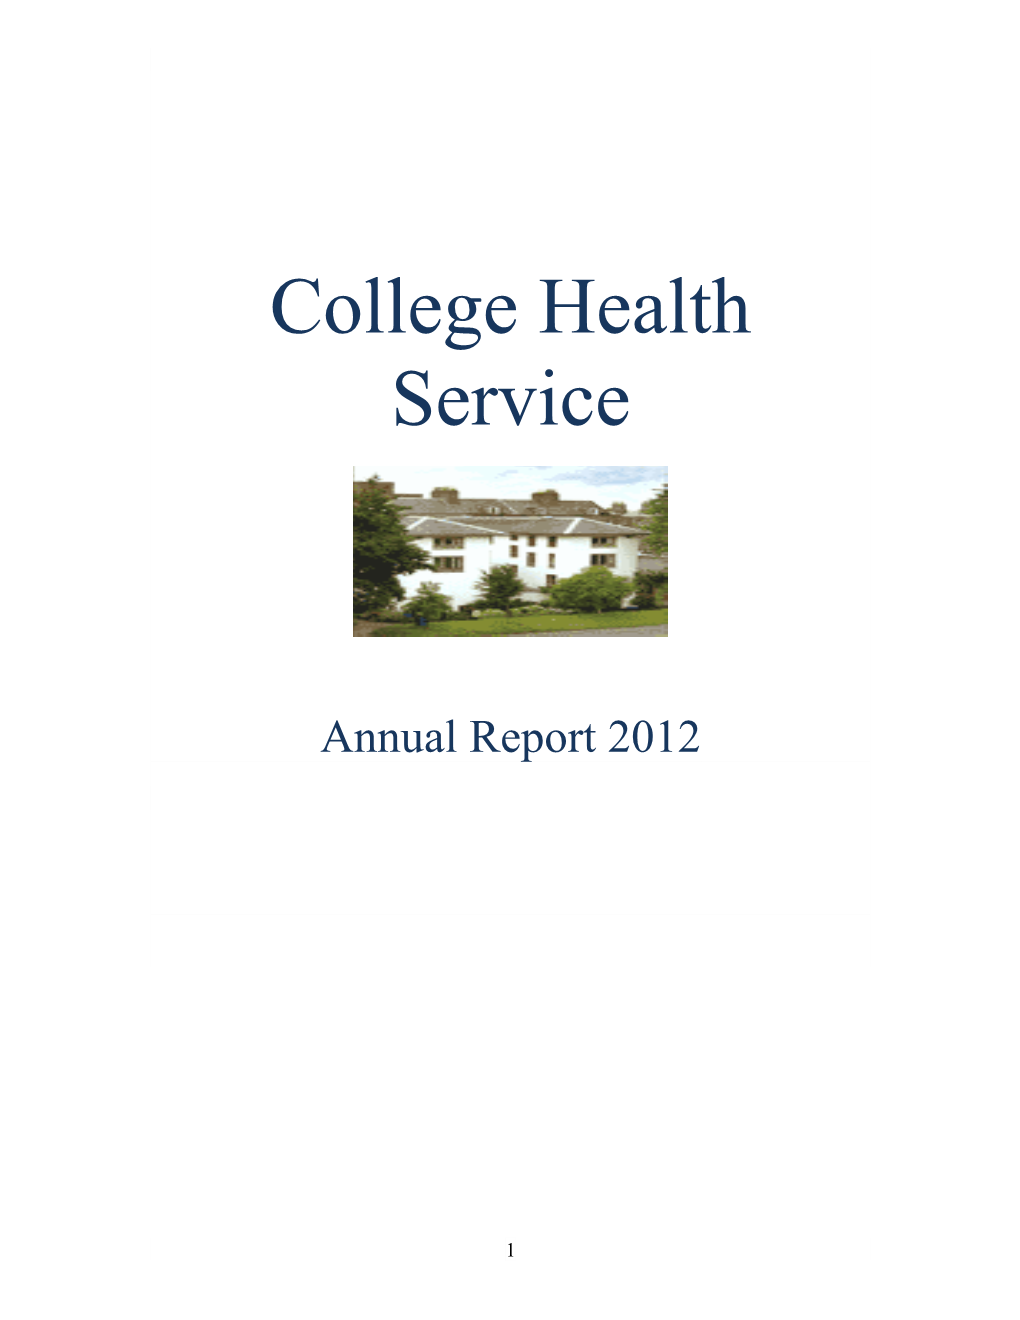 Annual Report to Board -2008-09 Created Feb 10